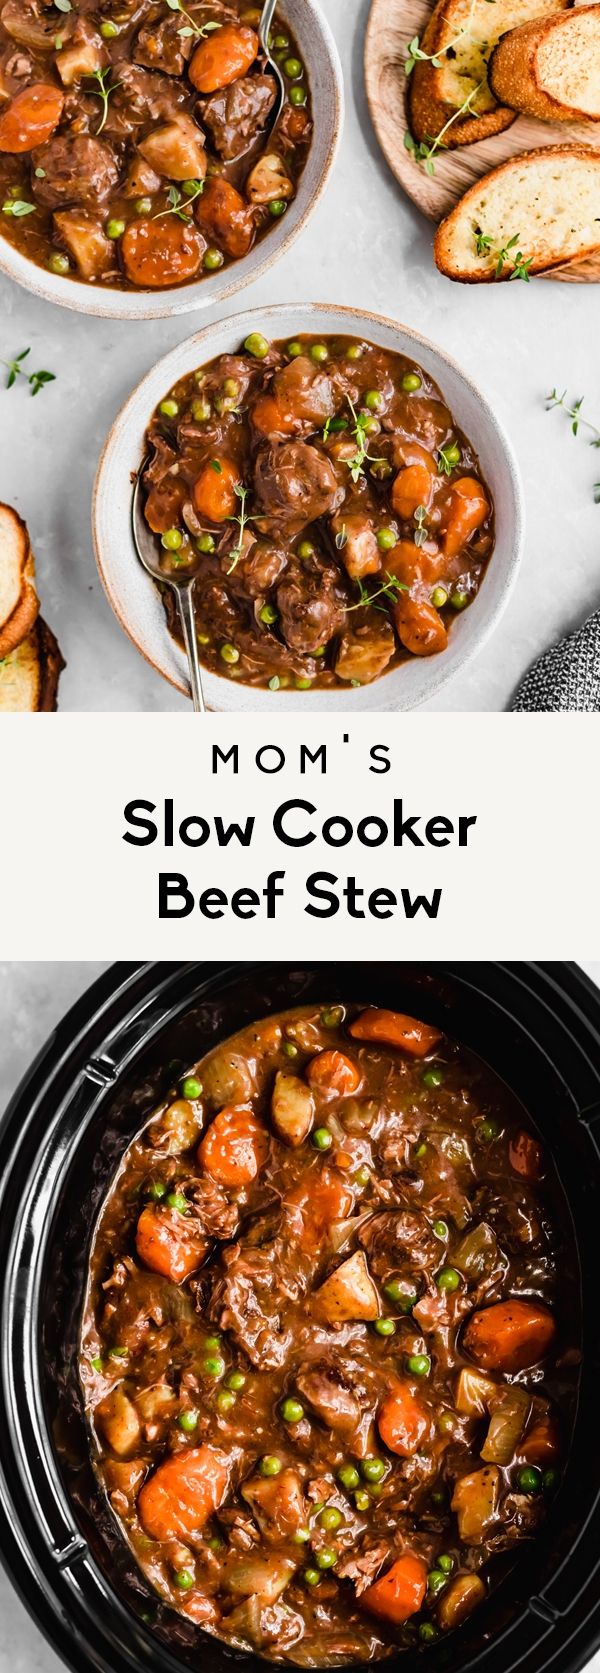 Easy Beef Stew In Slow Cooker Uk